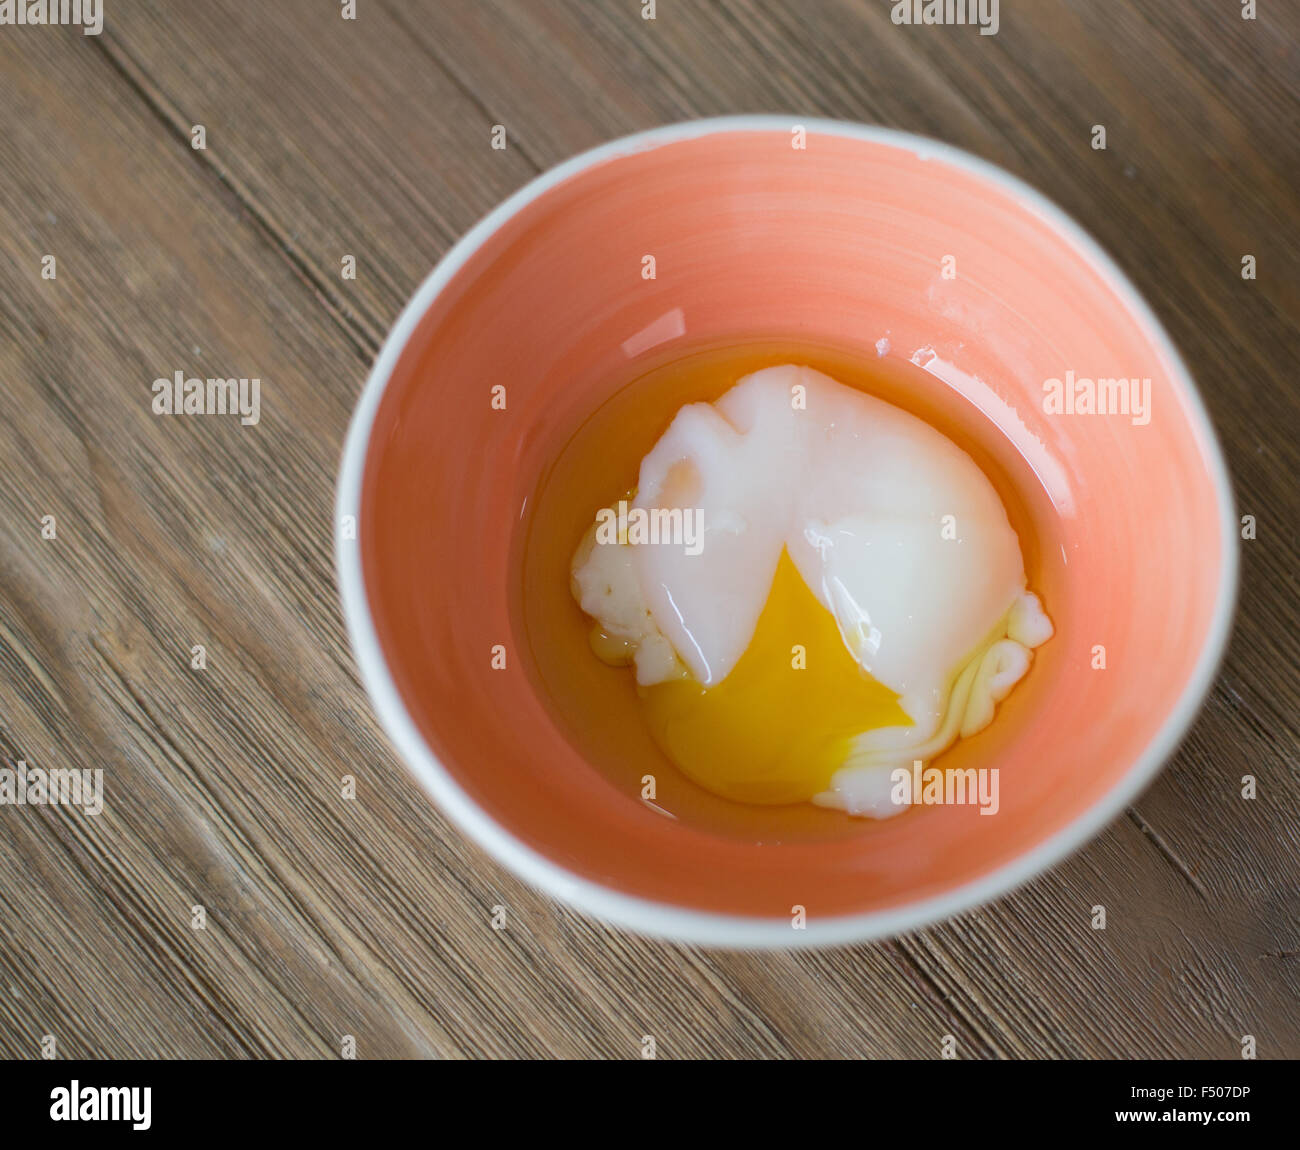 Yema de huevo que moquea fotografías e imágenes de alta resolución - Alamy